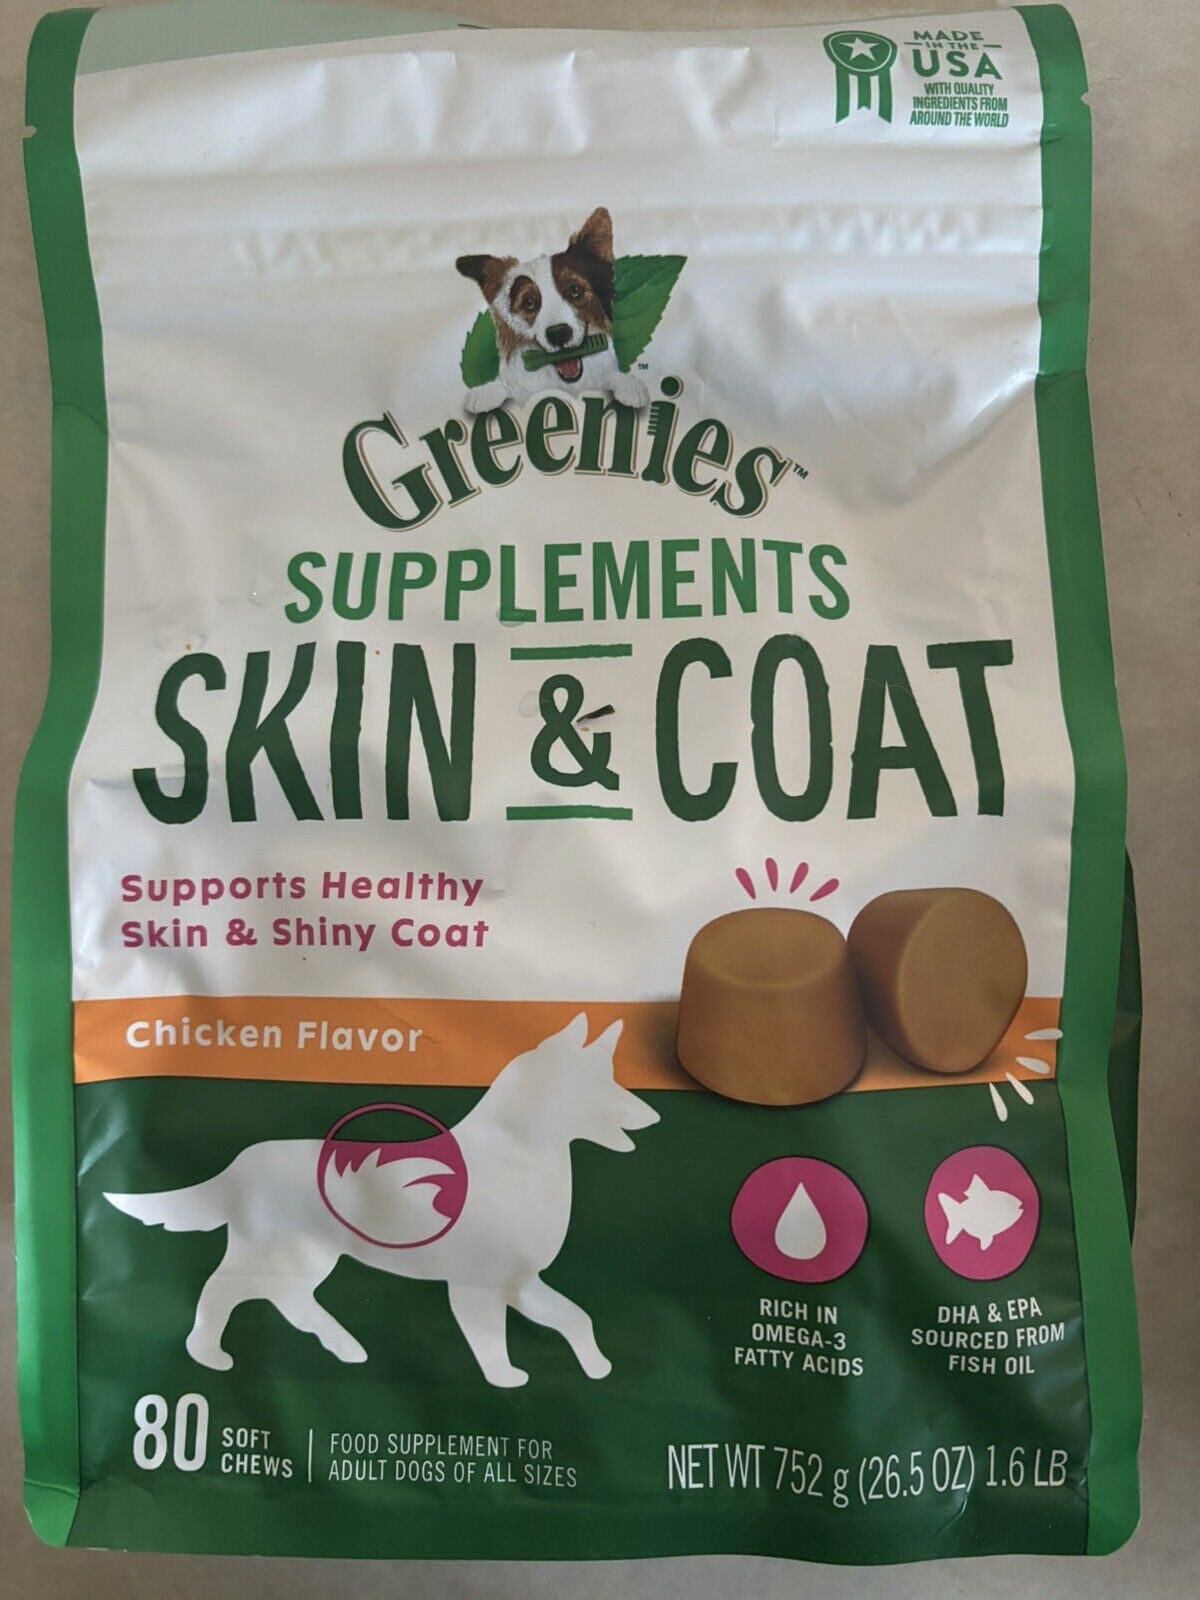 GREENIES Skin & Coat Food Supplements 80 Chicken Flavor Soft Chews Omega 3 1.6LB